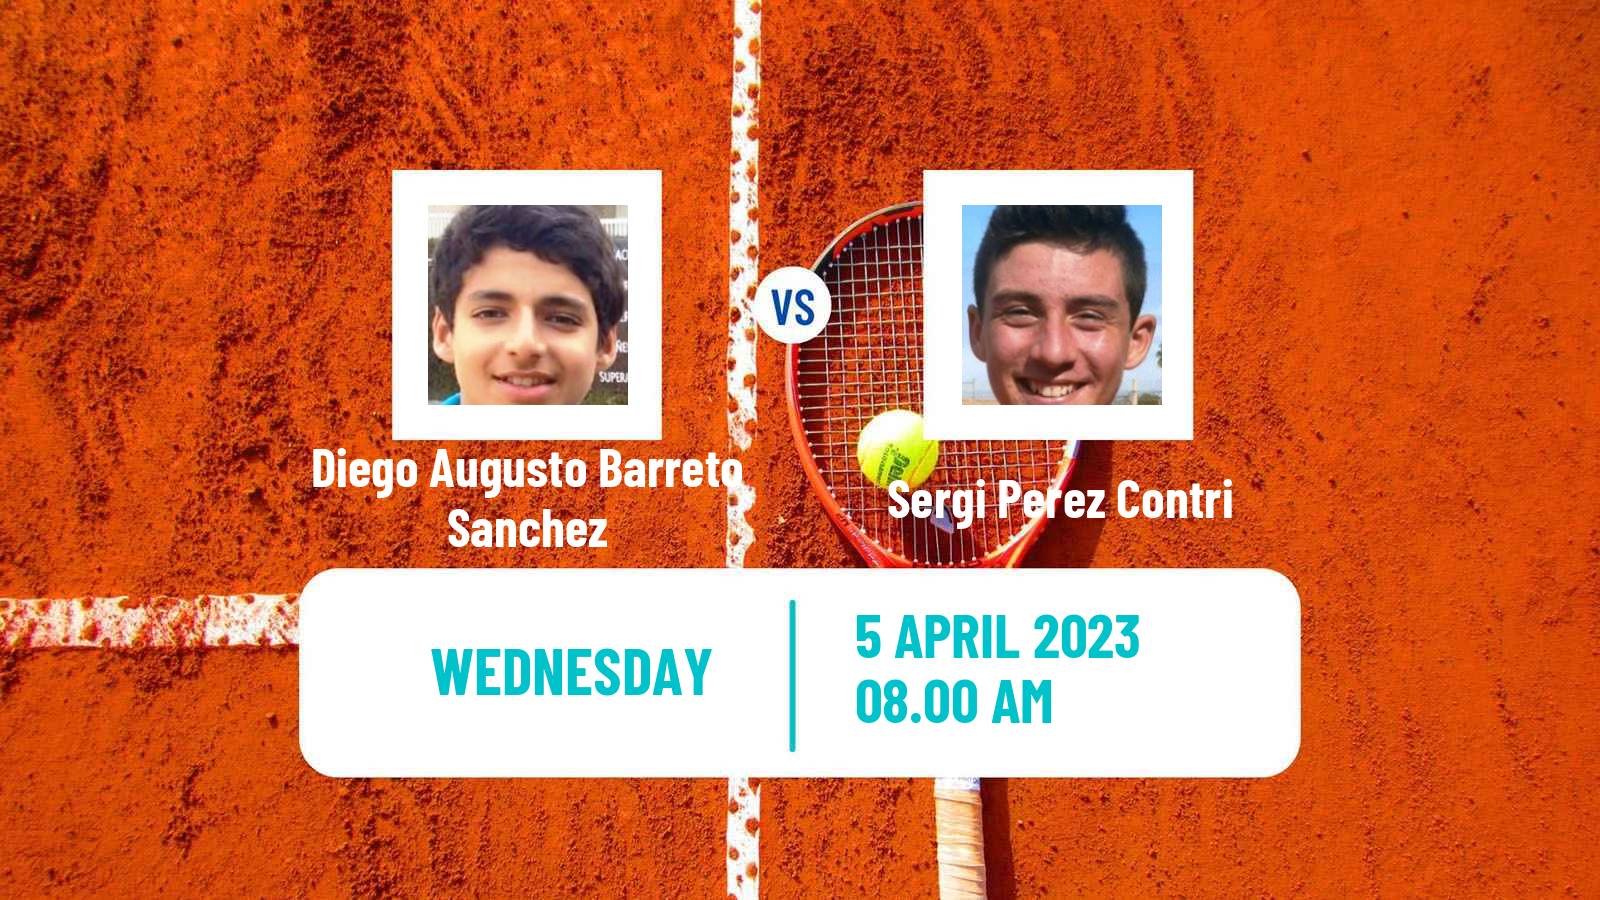 Tennis ITF Tournaments Diego Augusto Barreto Sanchez - Sergi Perez Contri